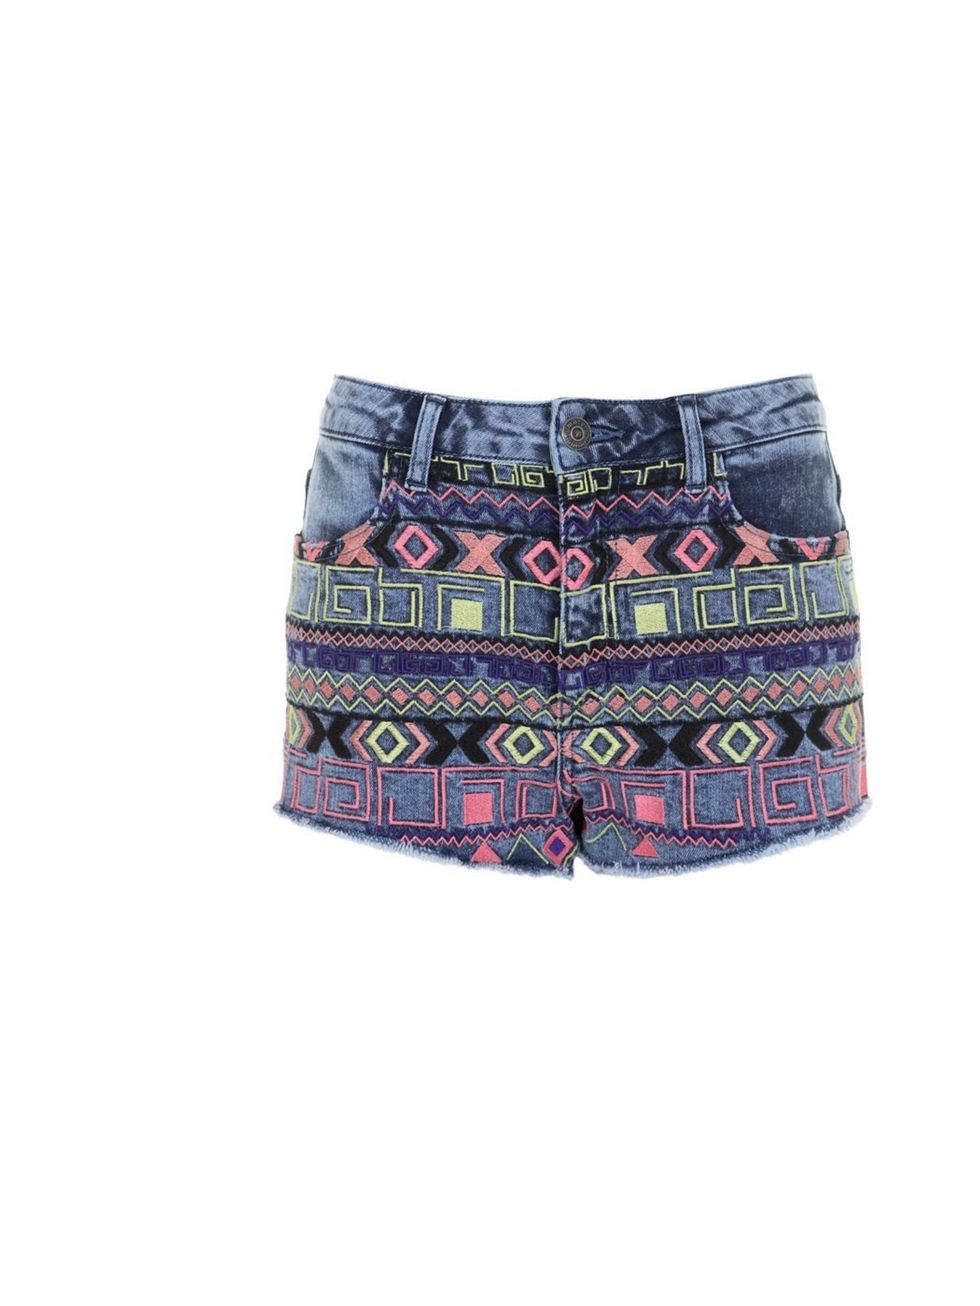 <p>Topshop Festival neon embroidered denim shorts, £35</p>